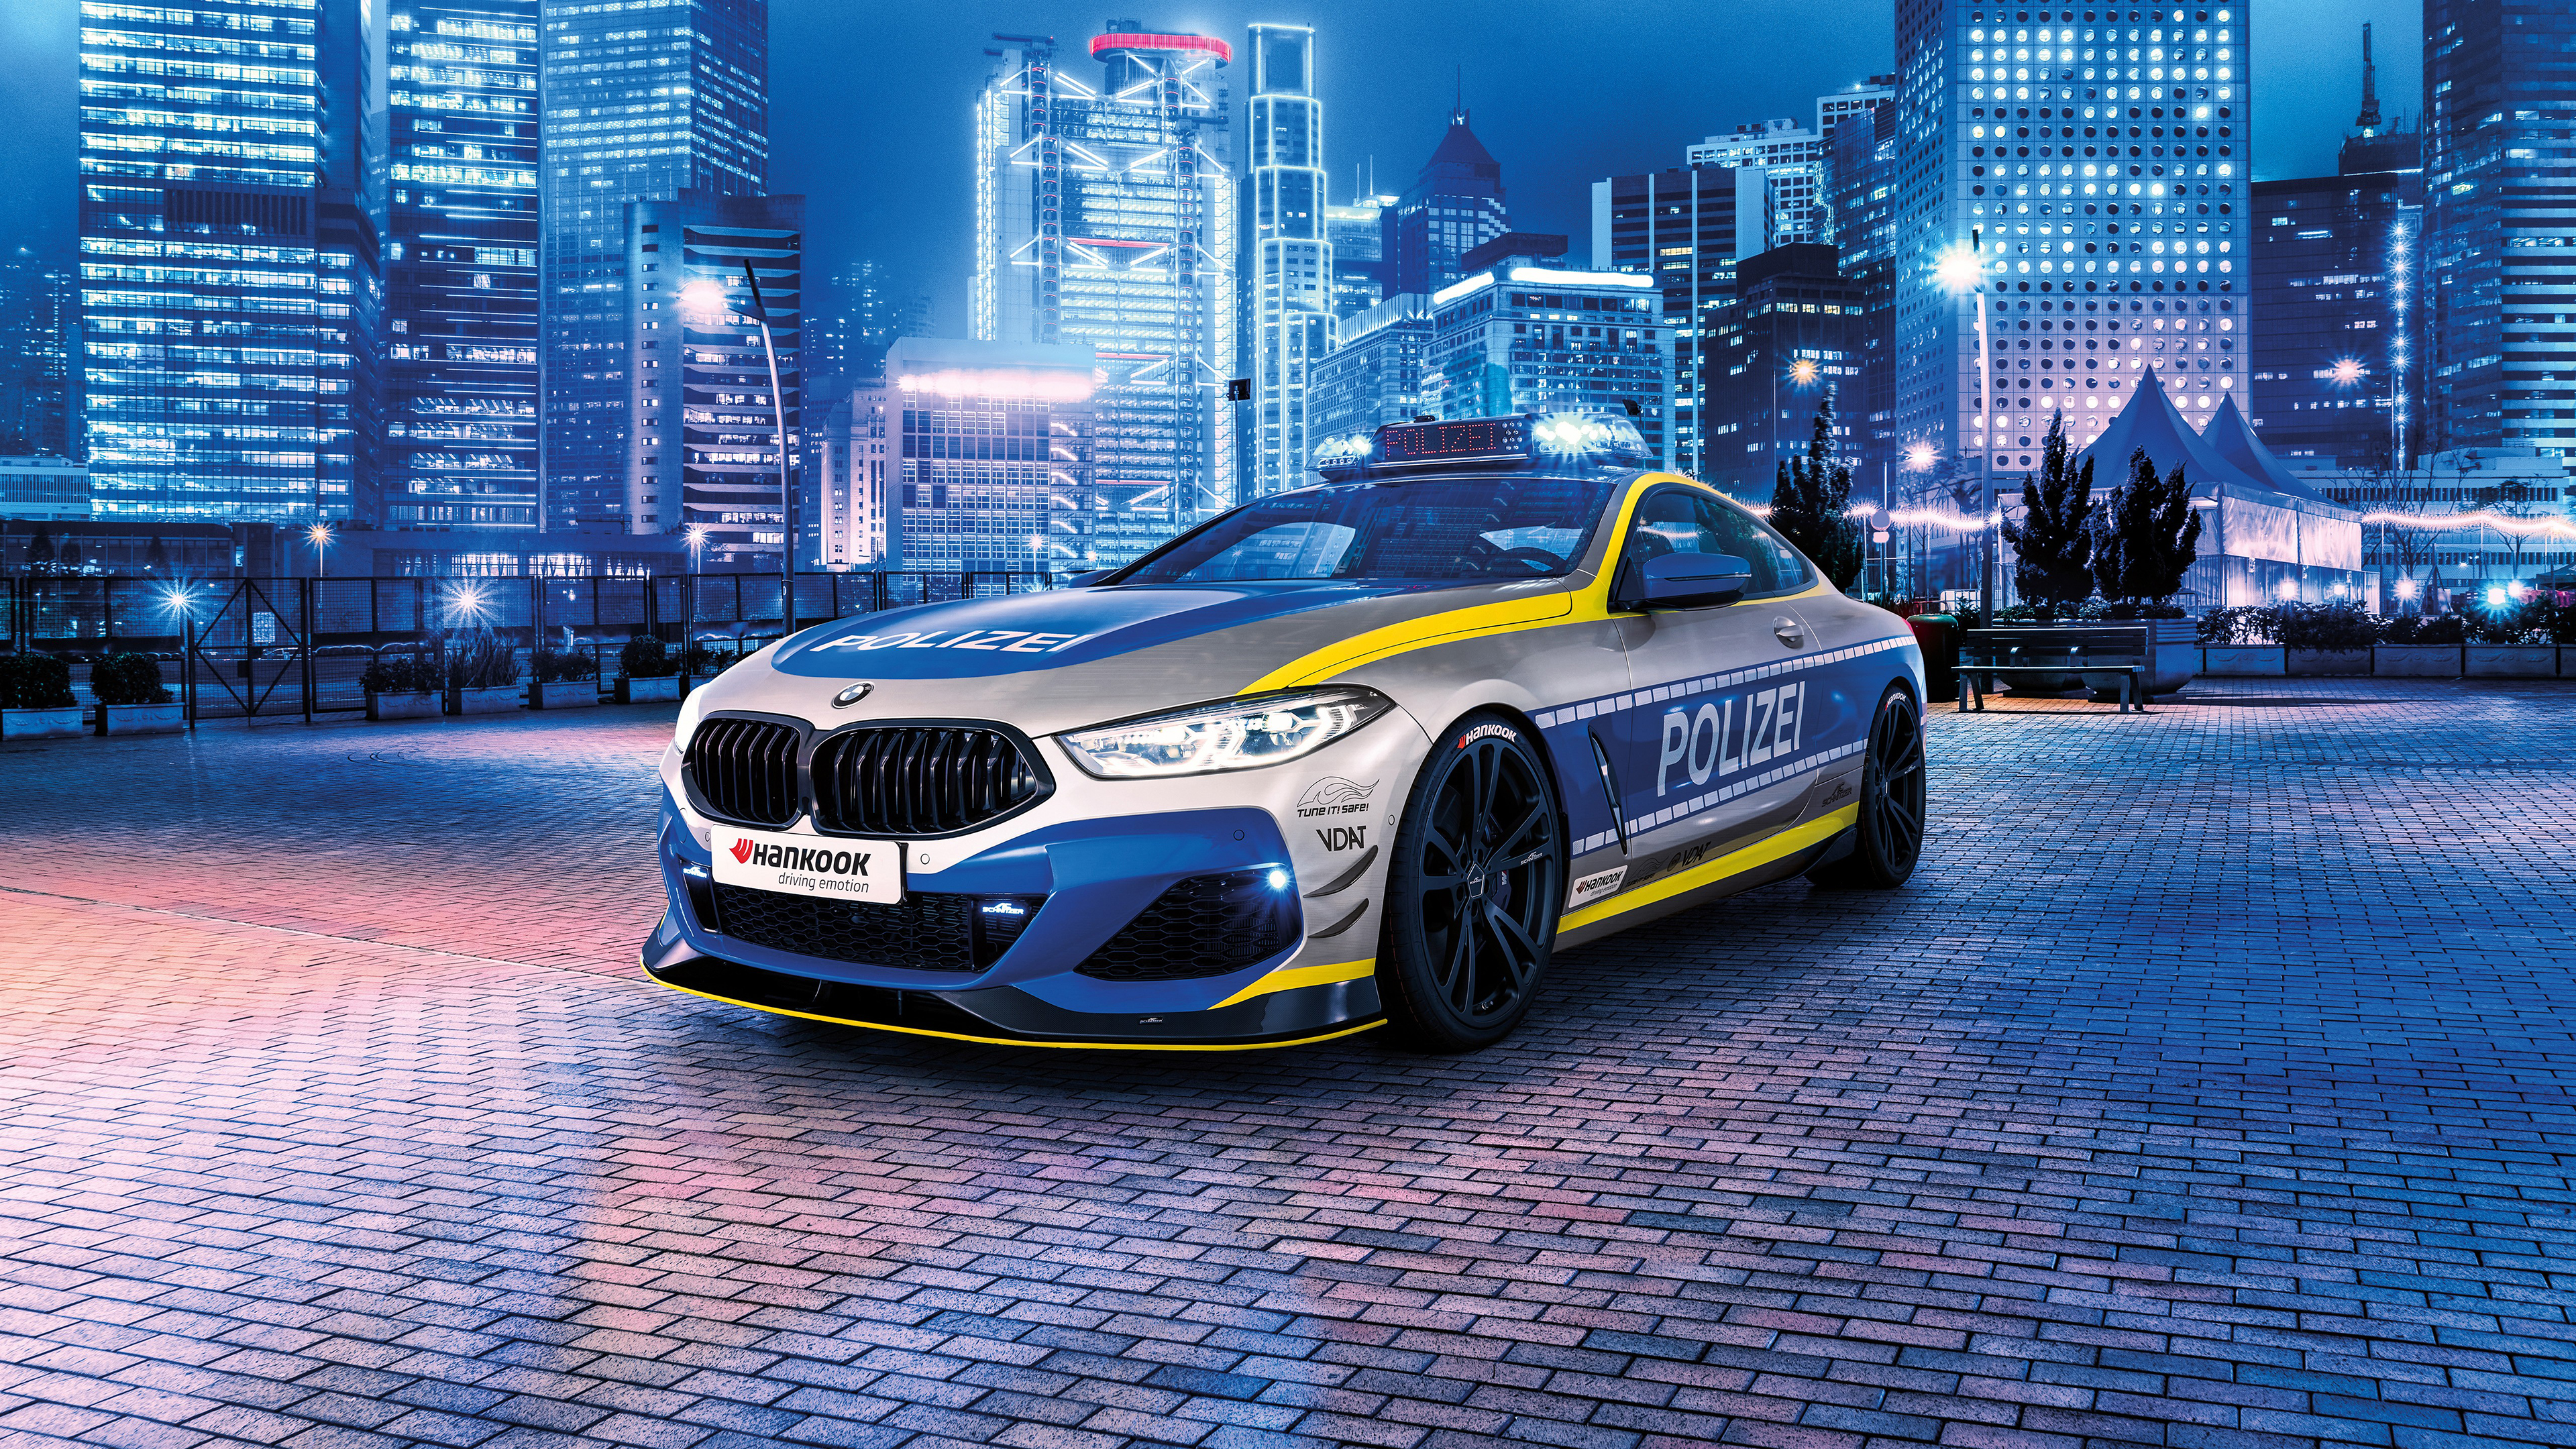 BMW Police Cars Concept Art Car Vehicle City Lights Night Skyscraper AC Schnitzer Park 3840x2160